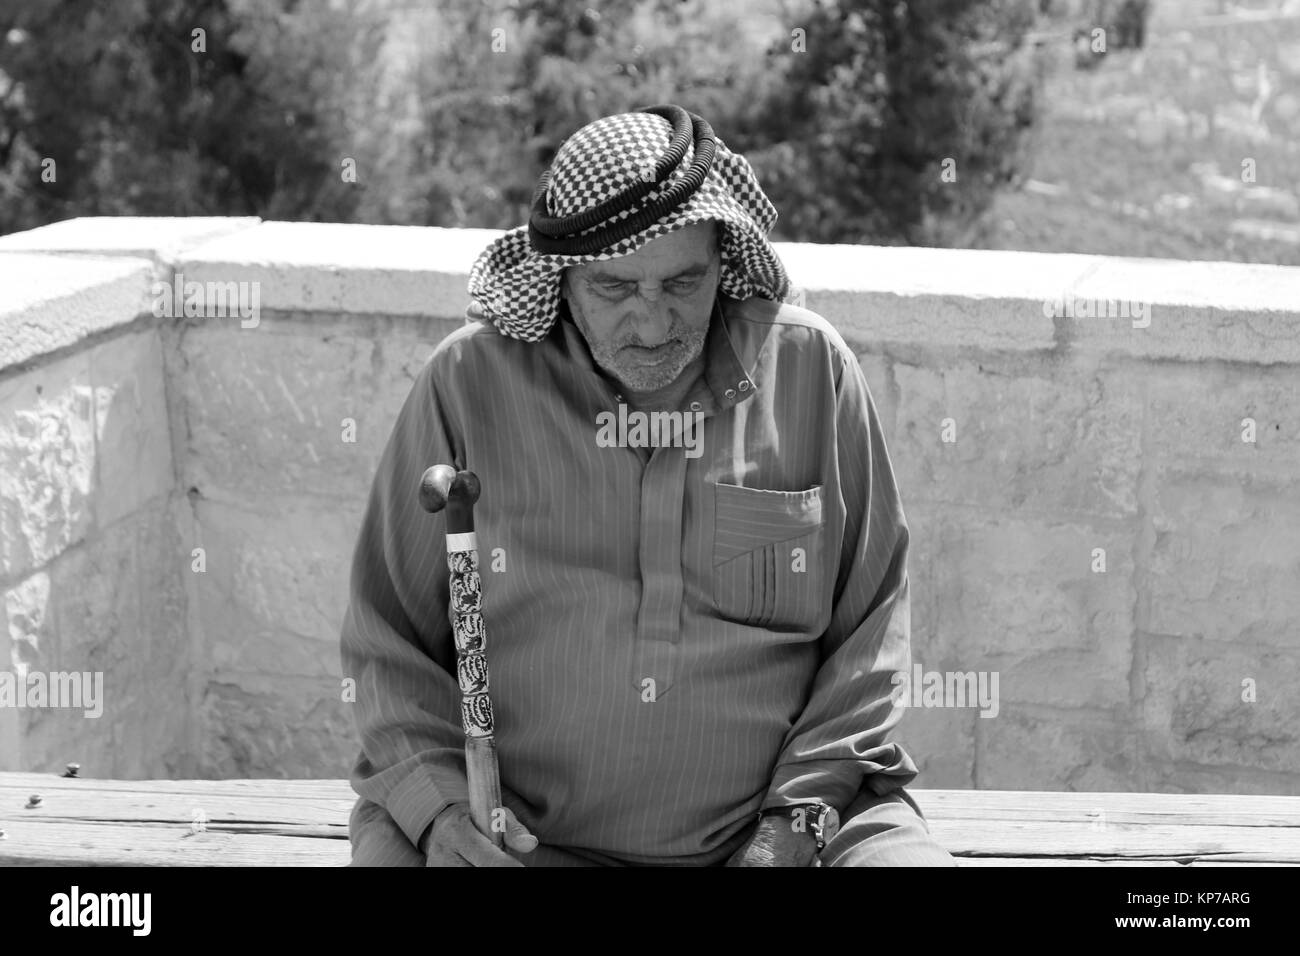 Tired Arab Dressed Senior - 21/04/2017 - Jordan / Amman - Sguardi Aridi by Ali Raffaele Matar shot in April 2017 - Sad old man sitting in Ajlun Stock Photo